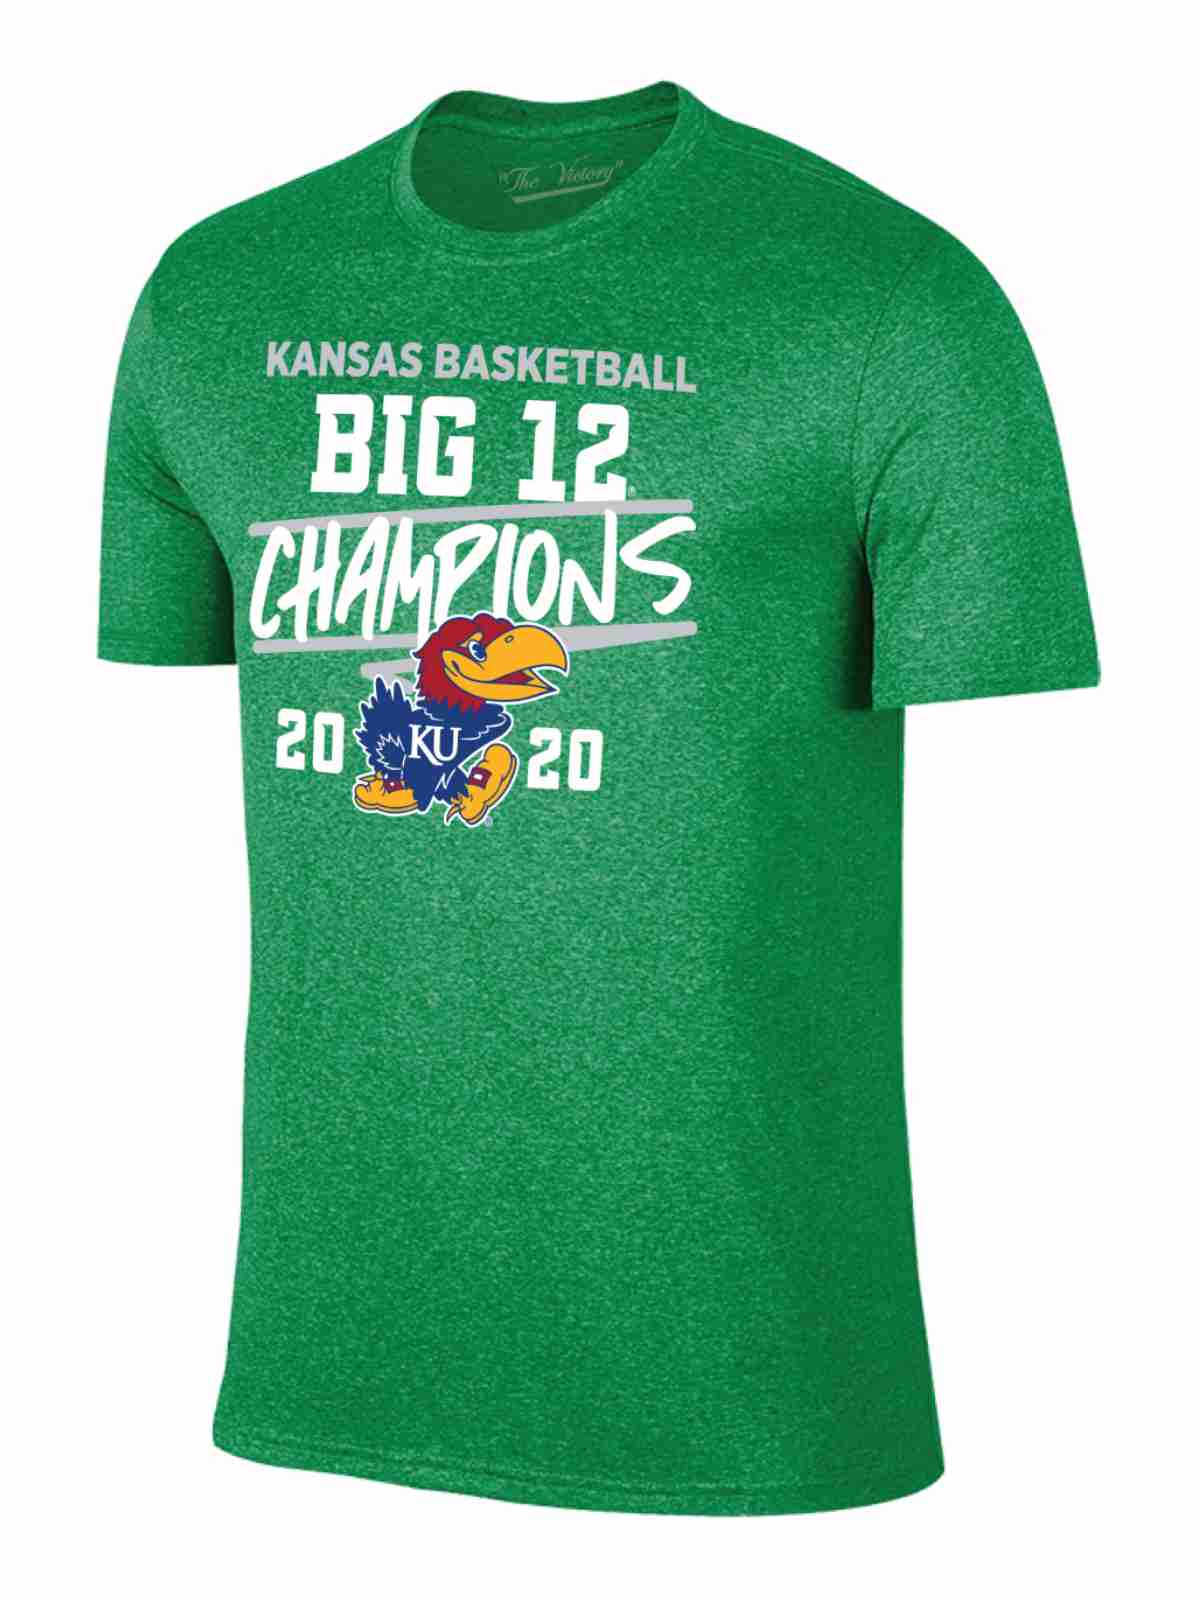 The Victory Kansas Jayhawks 2020 BIG 12 Basketball Champions St. Patty's Green T-Shirt